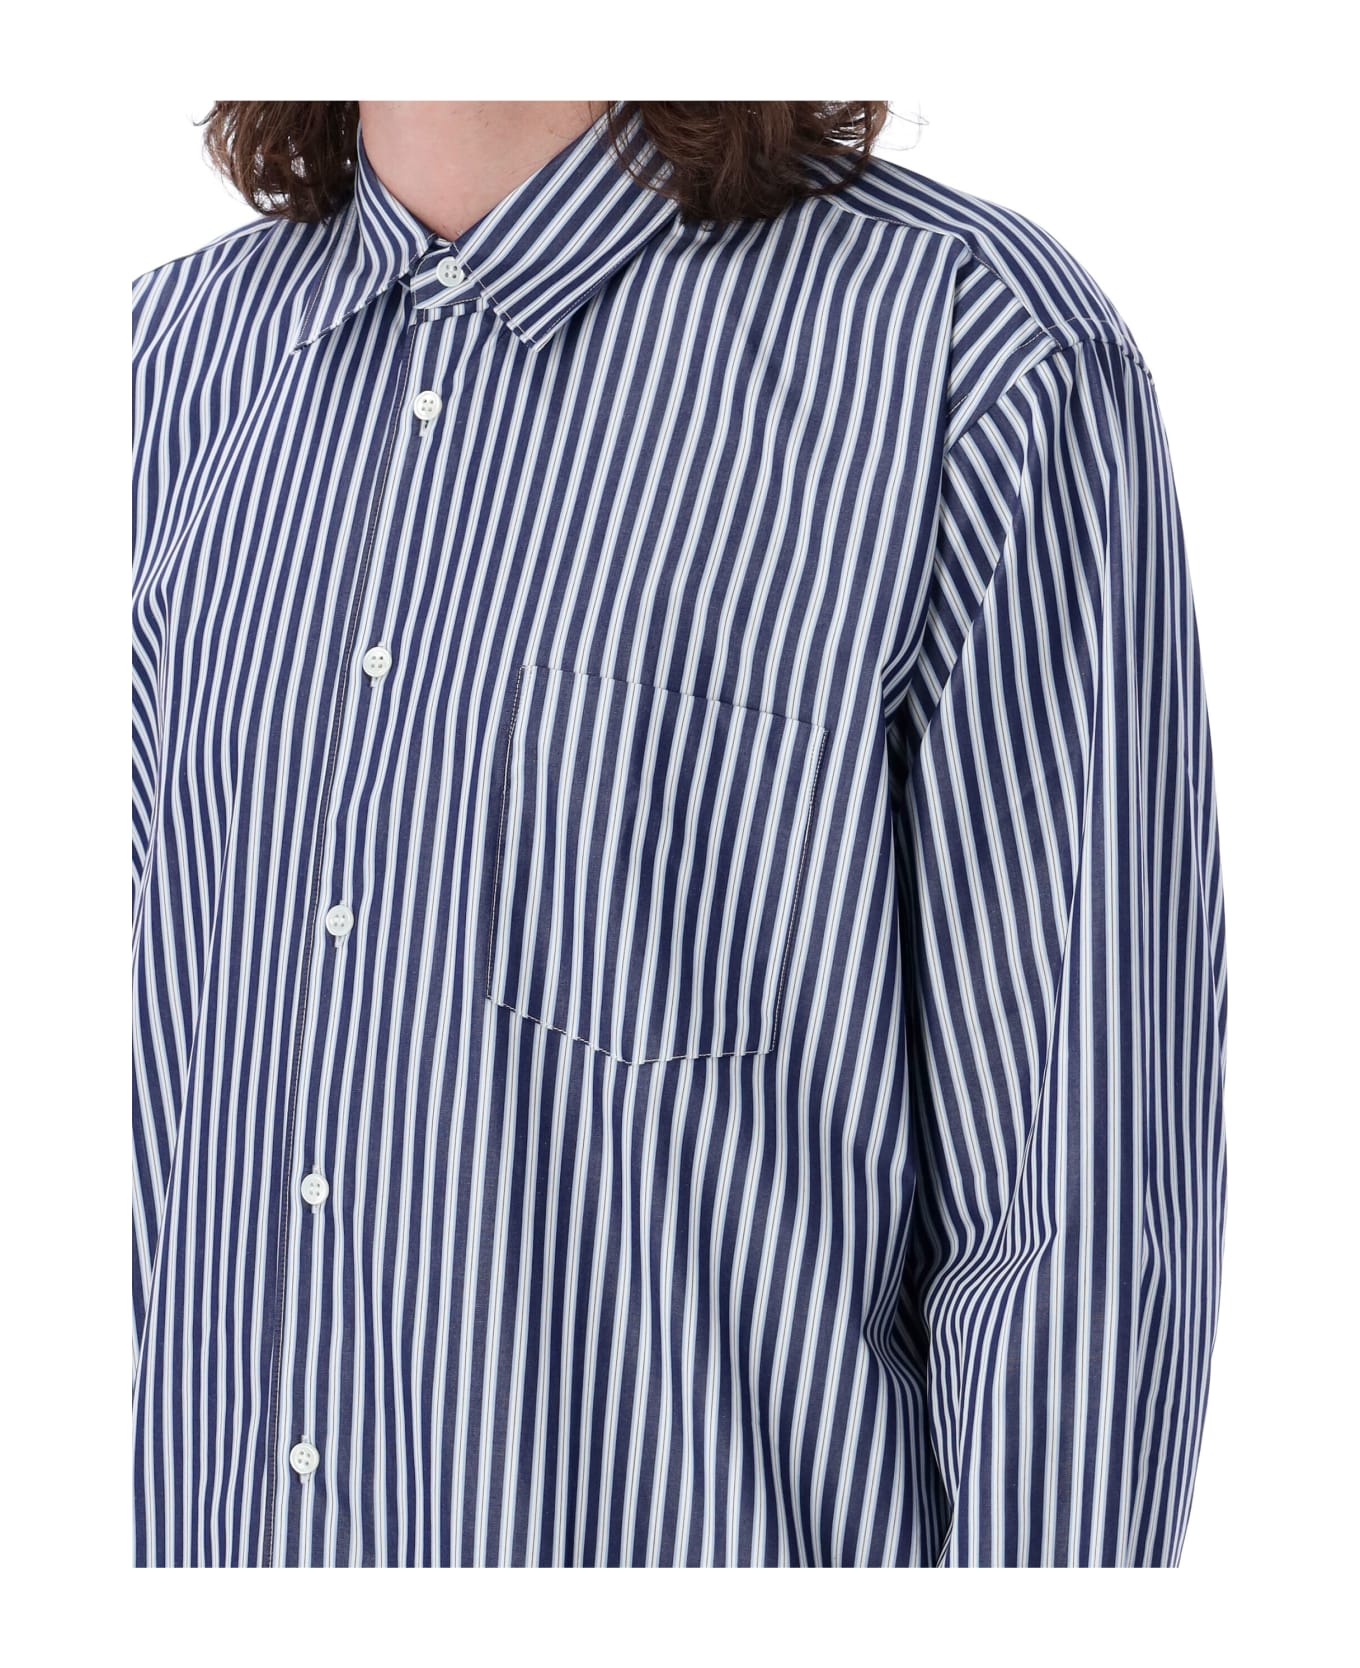 Comme des Garçons Shirt Stripes Shirt - WHITE BLUE